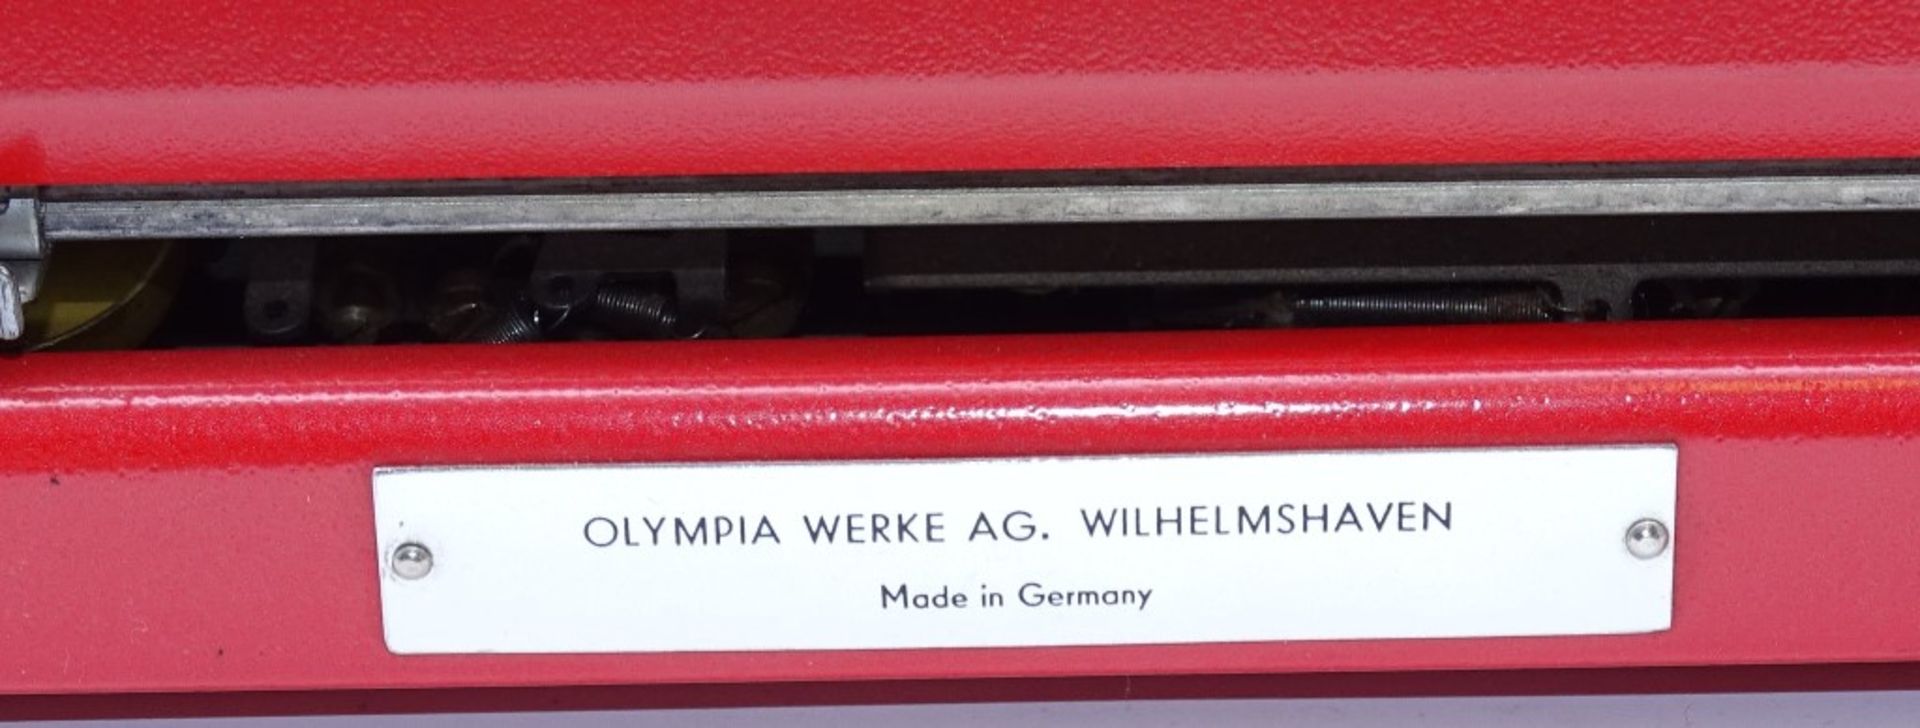 Schreibmaschine Olympia Splendid 33, Olympia Werke AG Wilhelmshaven - Image 6 of 6